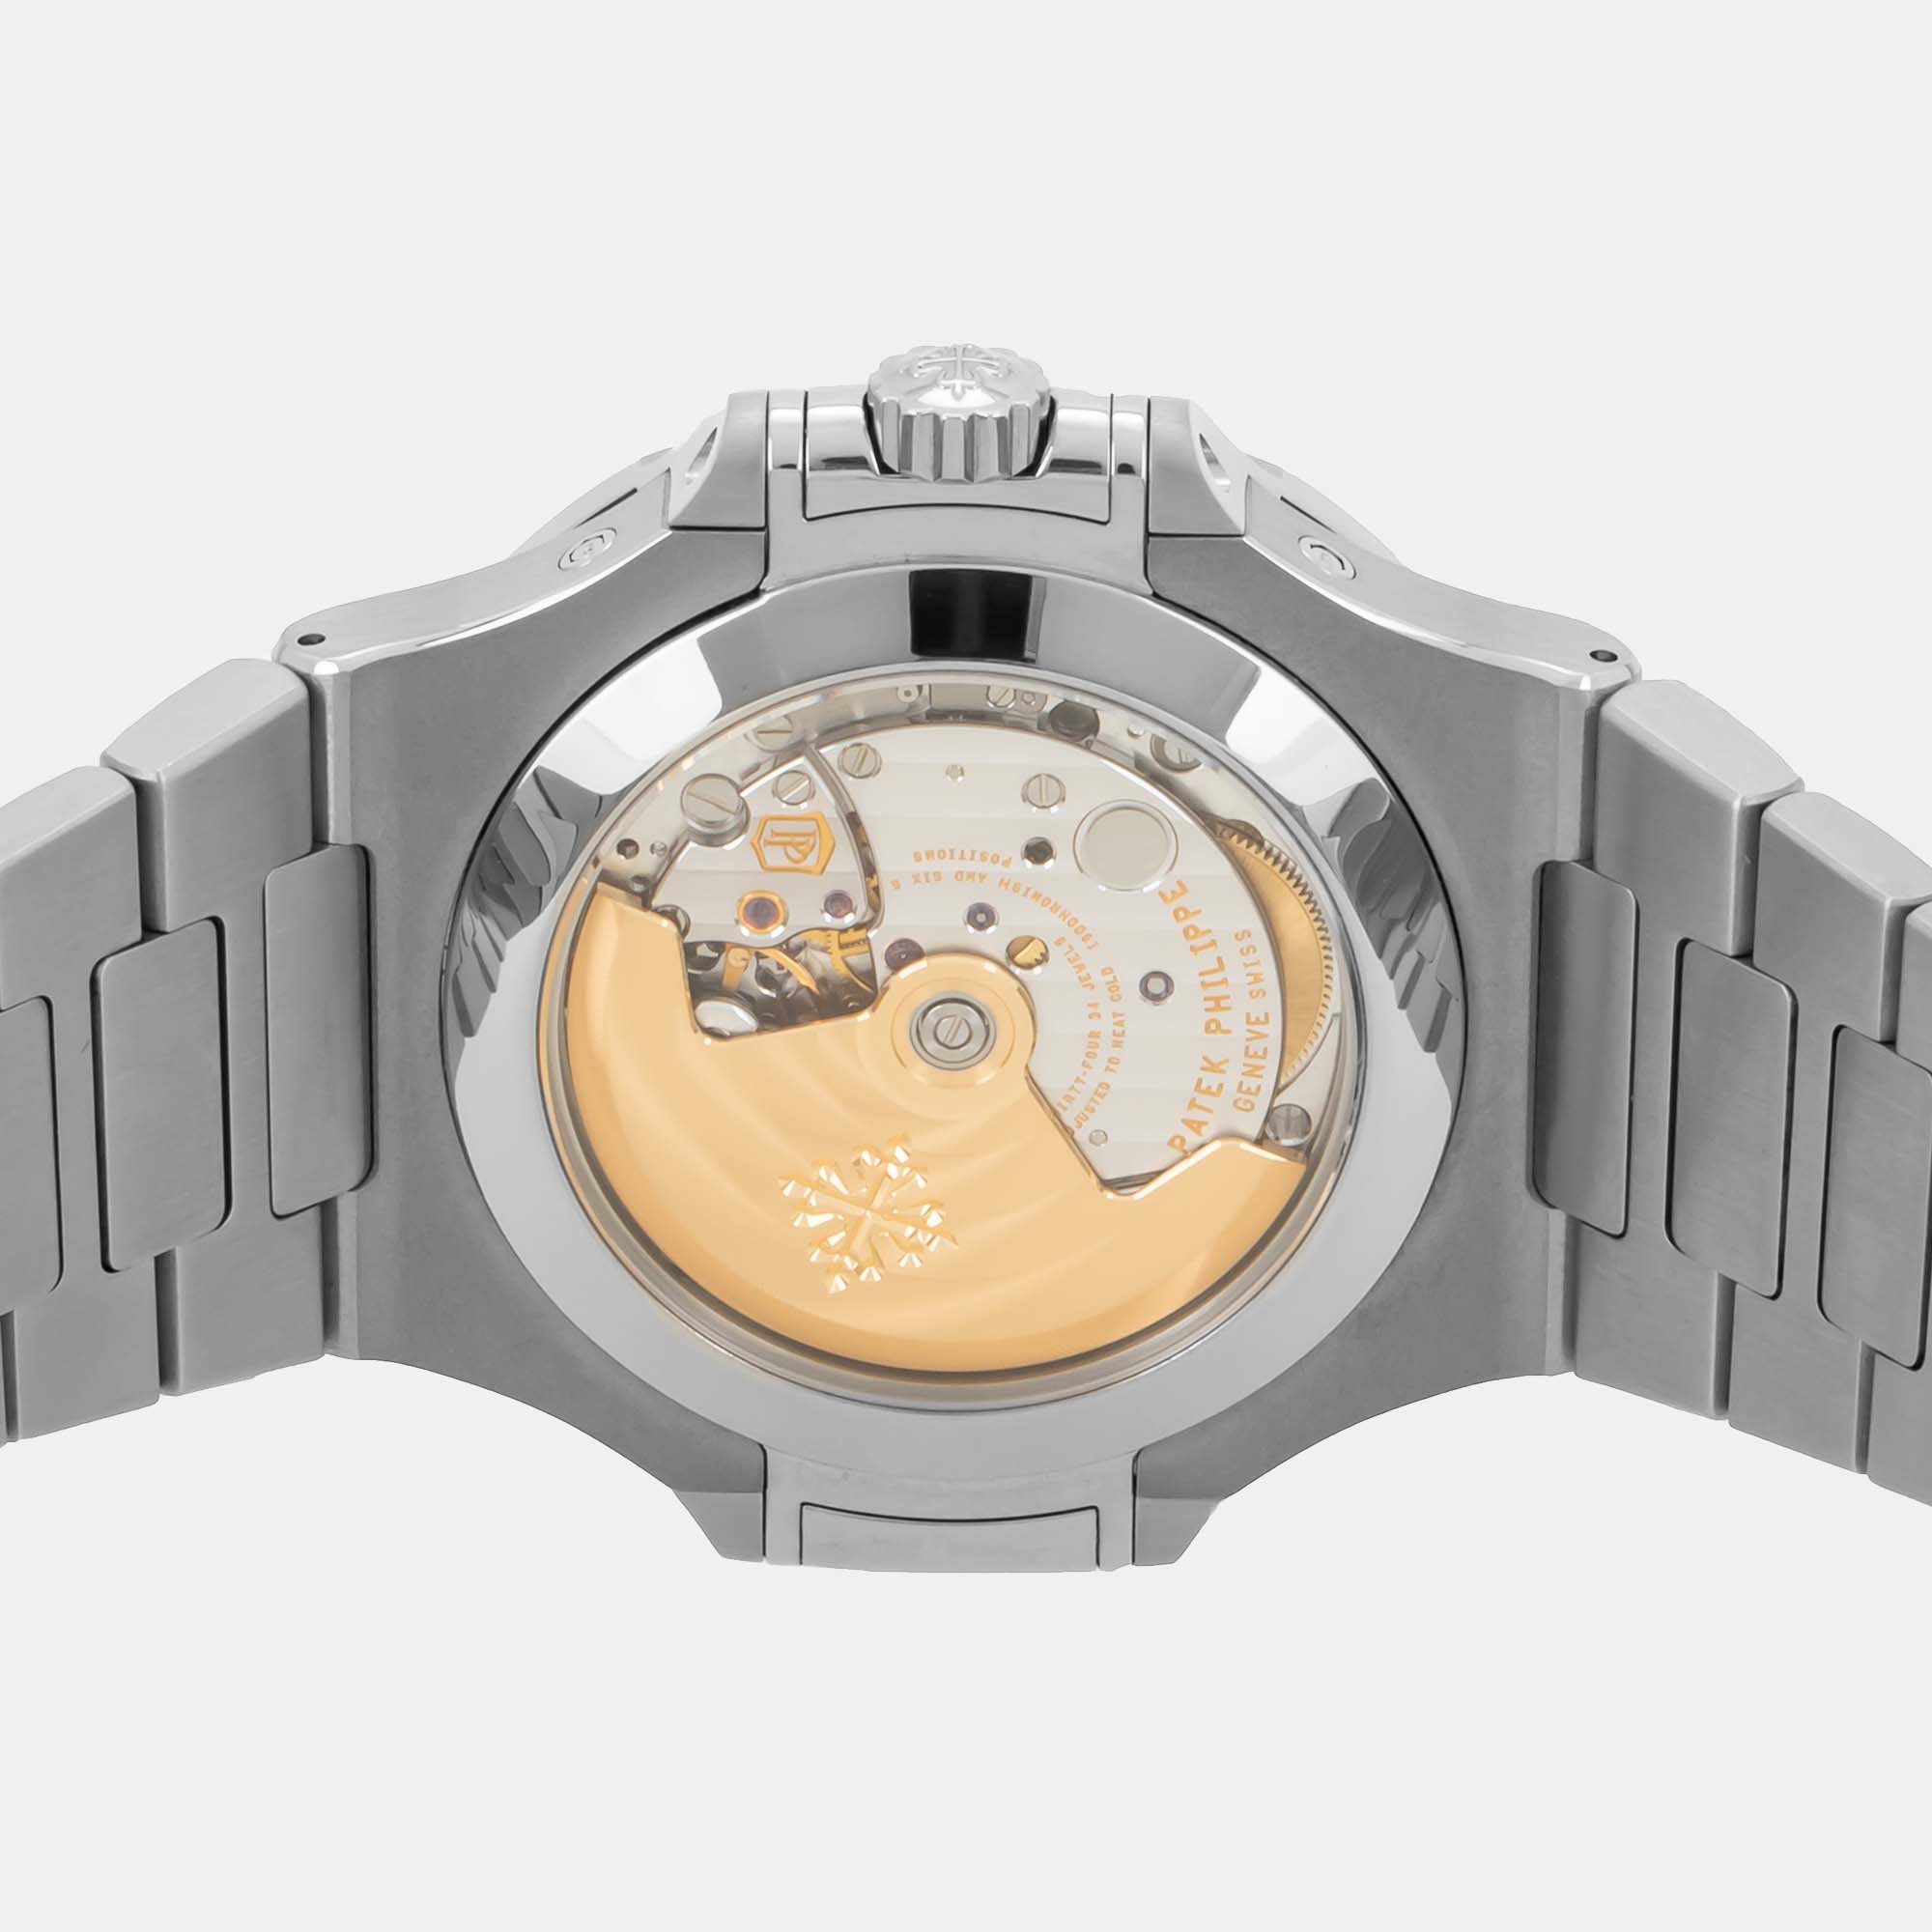 Patek Philippe Blue Stainless Steel Nautilus 5726/1A-014 Automatic Men's Wristwatch 40 Mm